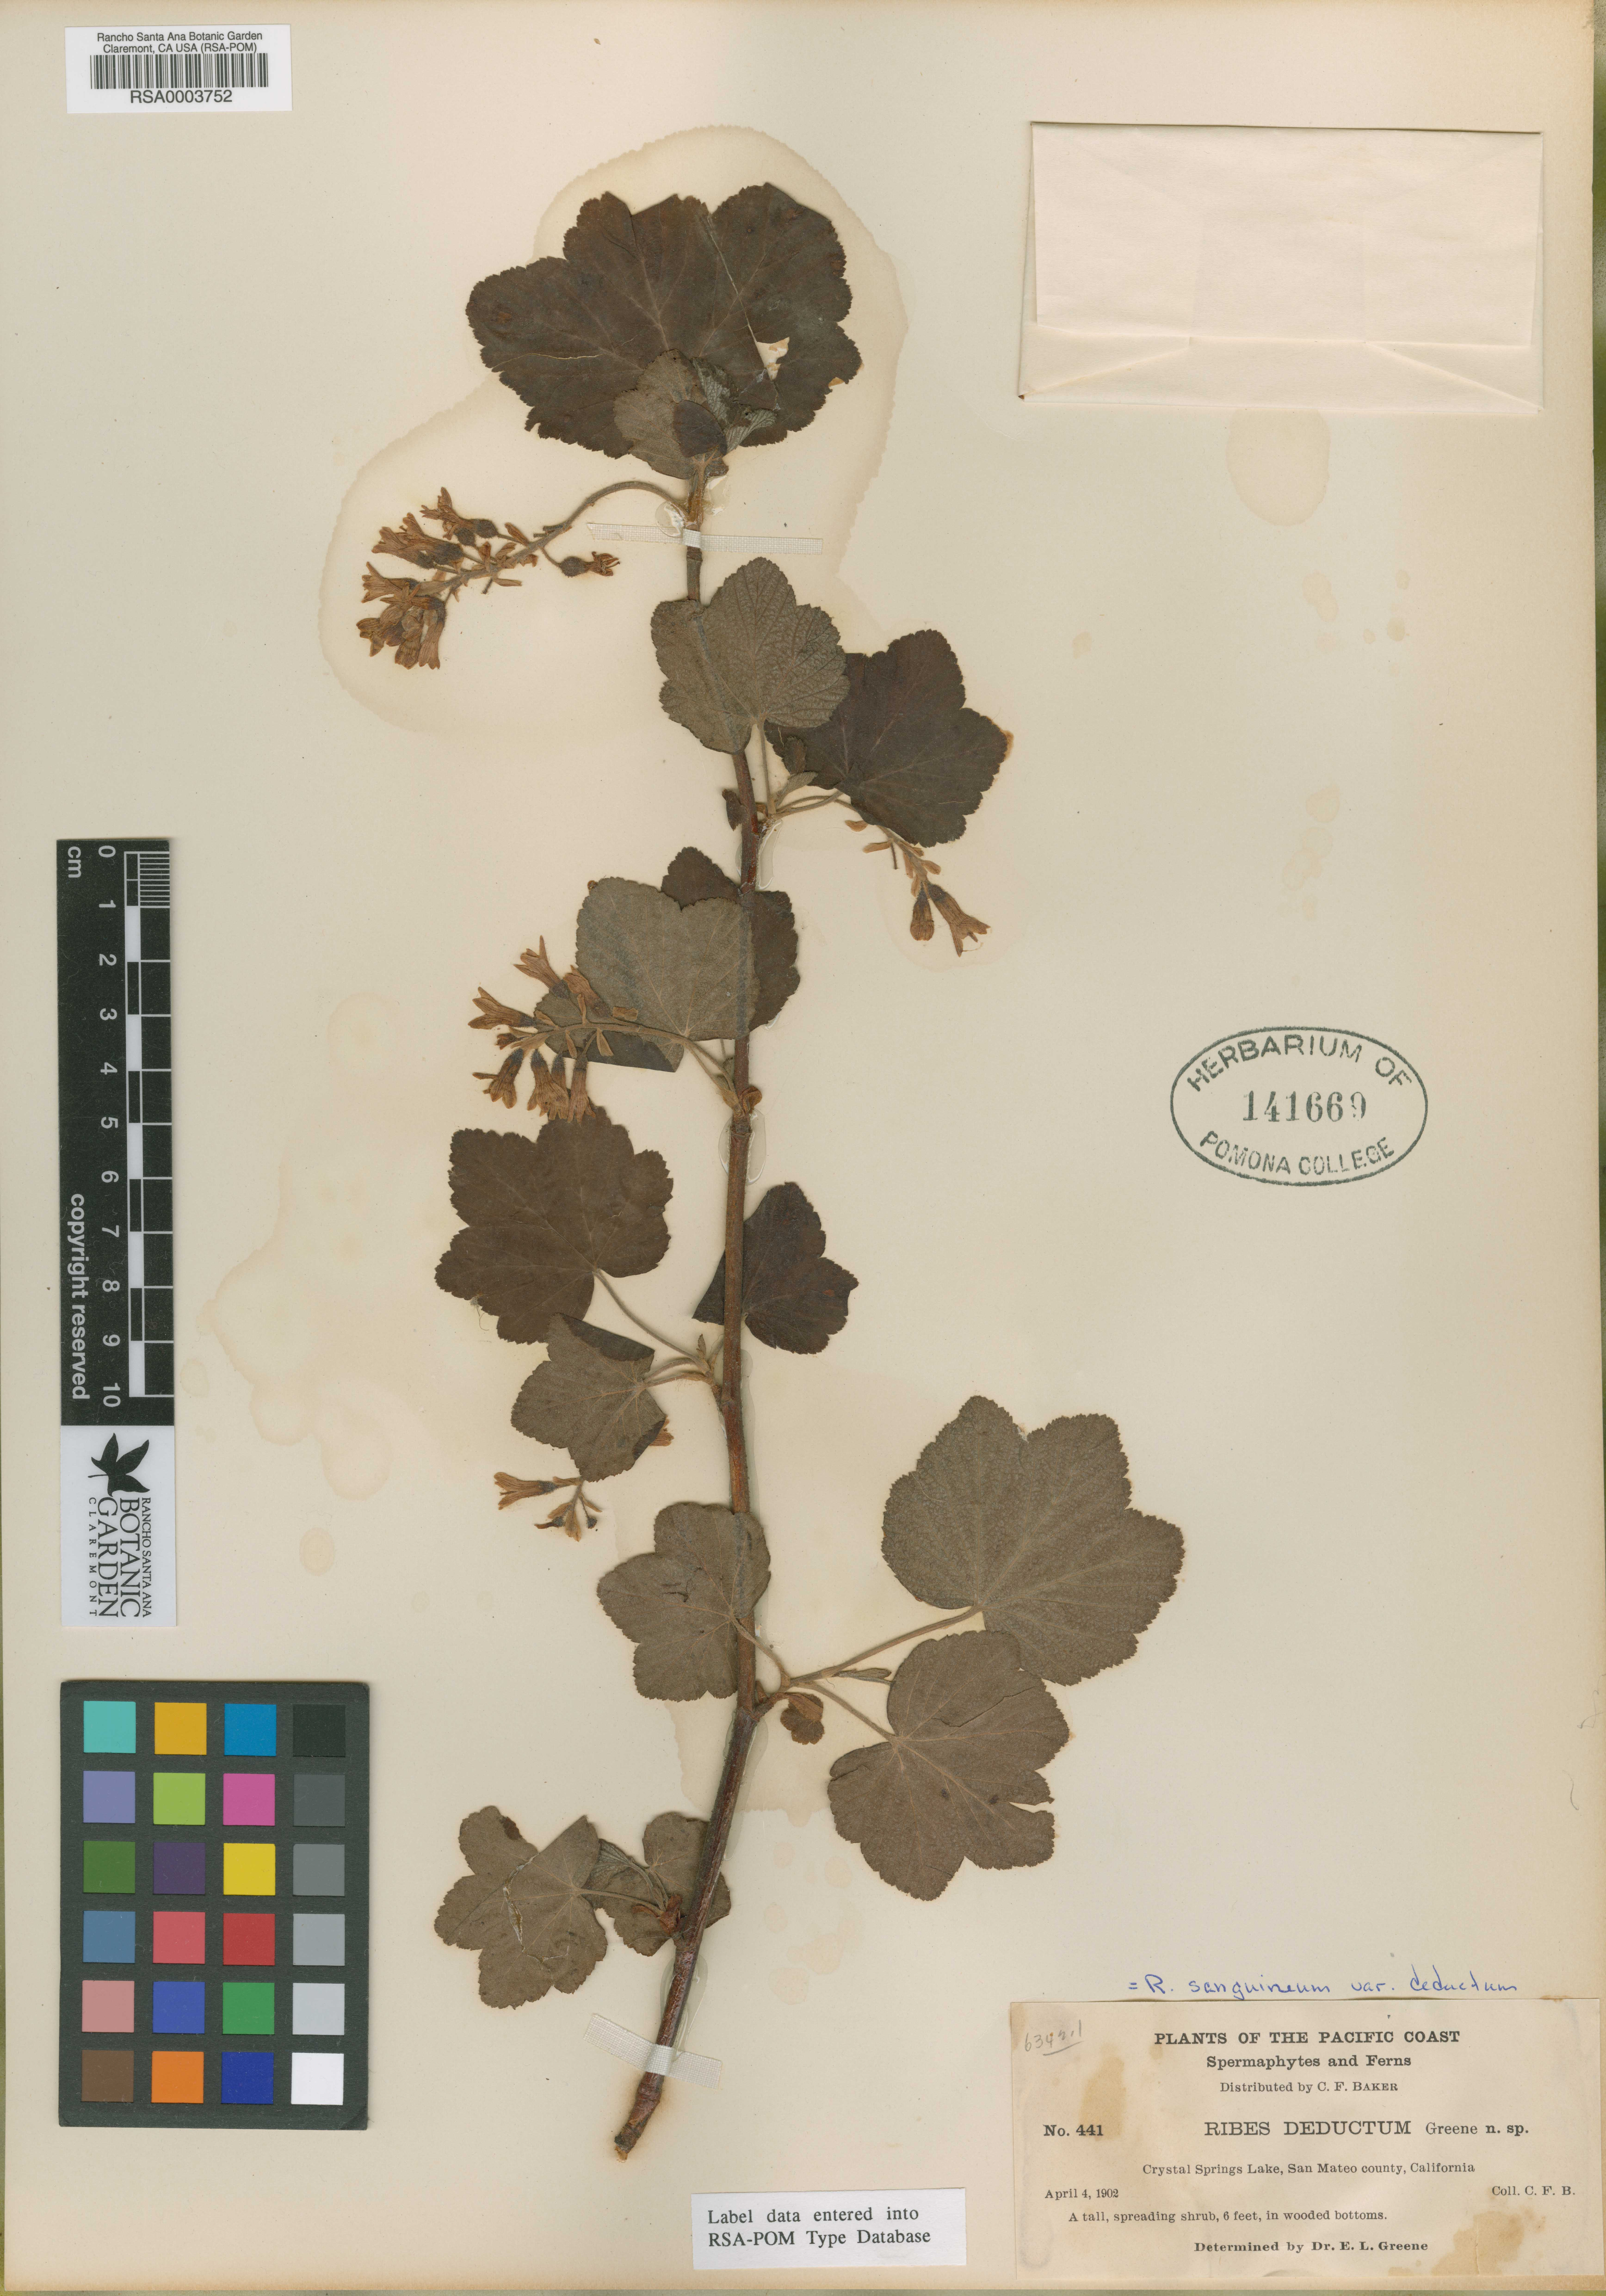 Image of Ribes deductum